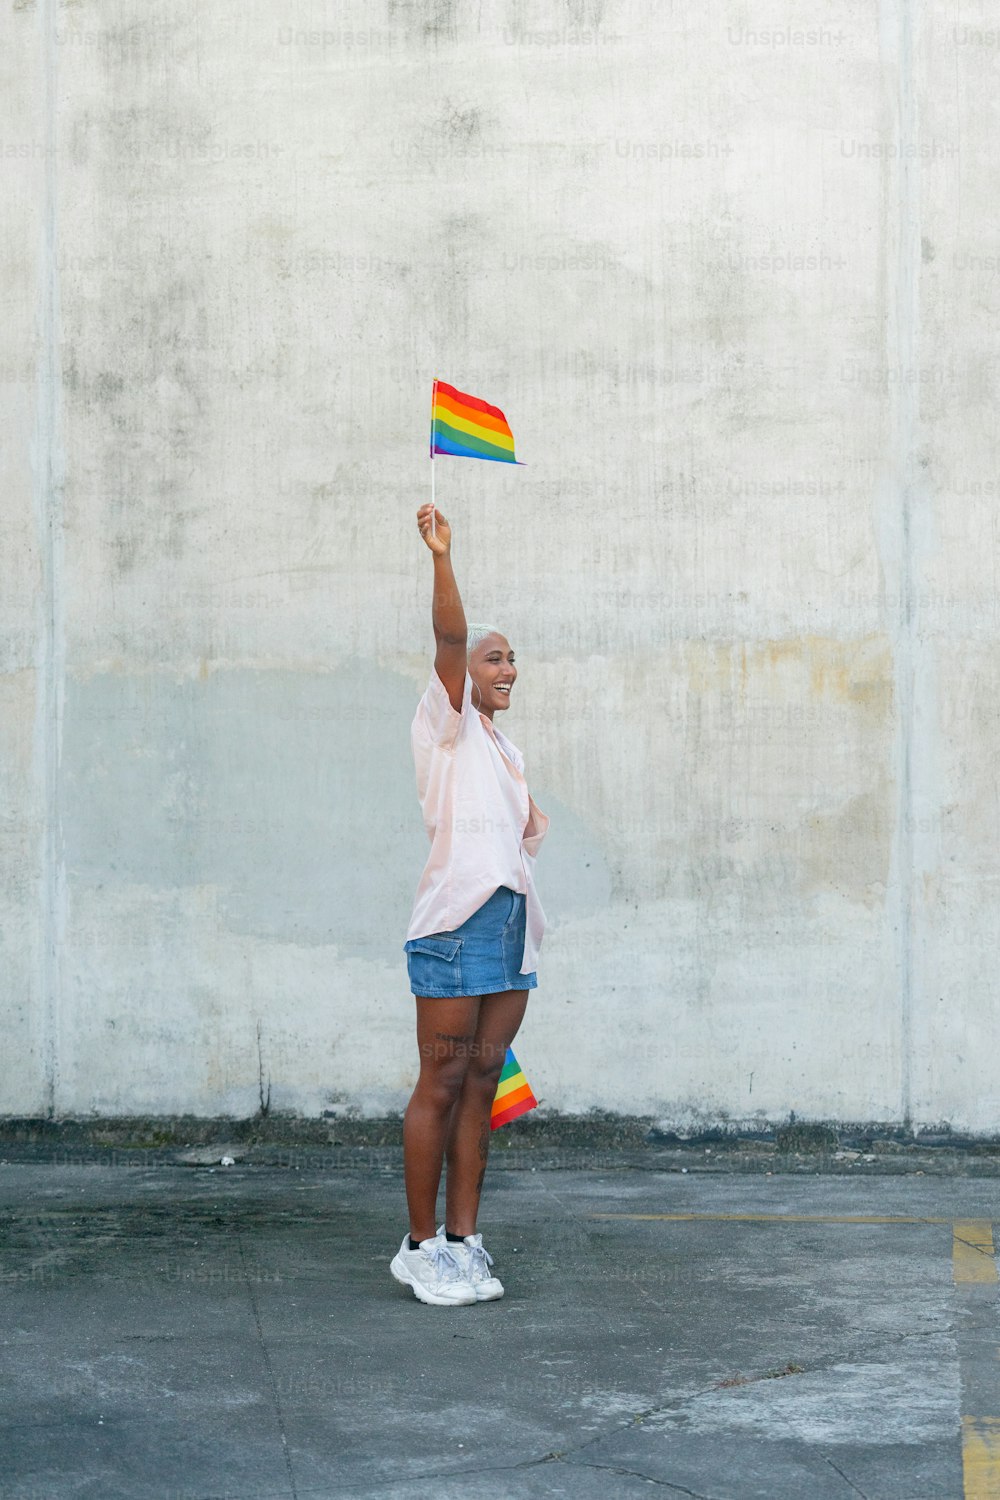 a woman holding a rainbow flag in the air